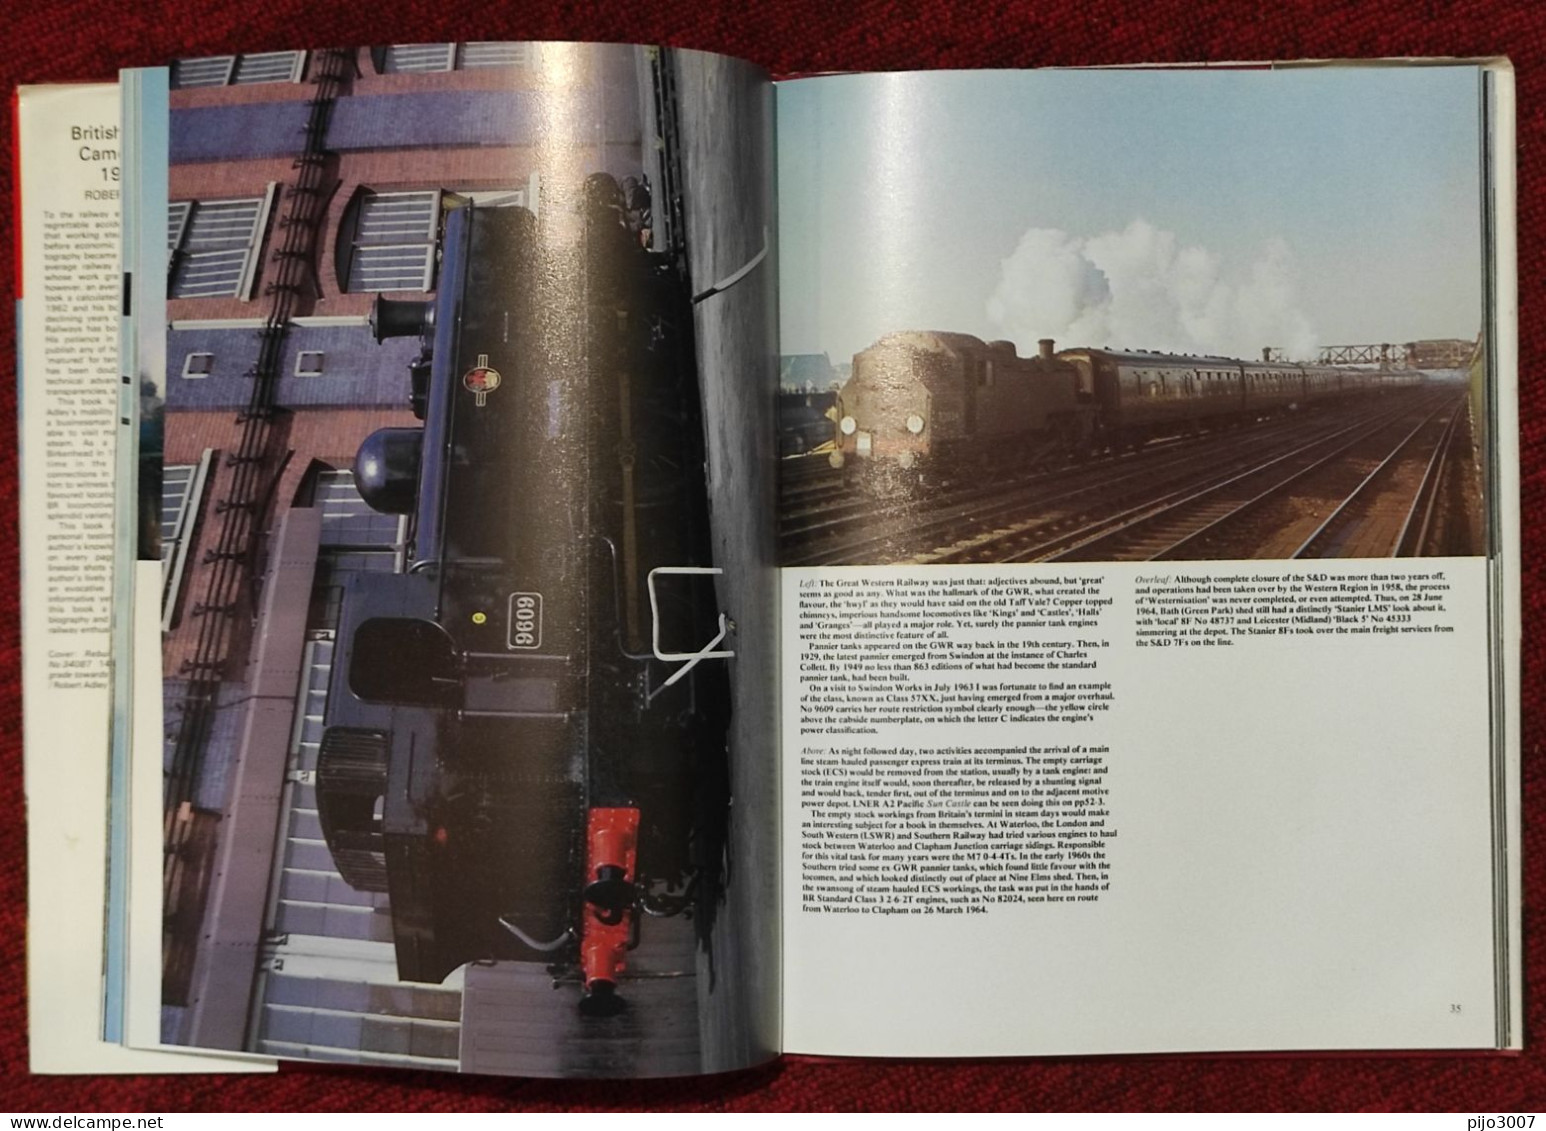 Livre Relié "British Steam In Cameracolour 1962-68 " – 1979 By Robert Adley (Author) - Ferrovie & Tranvie